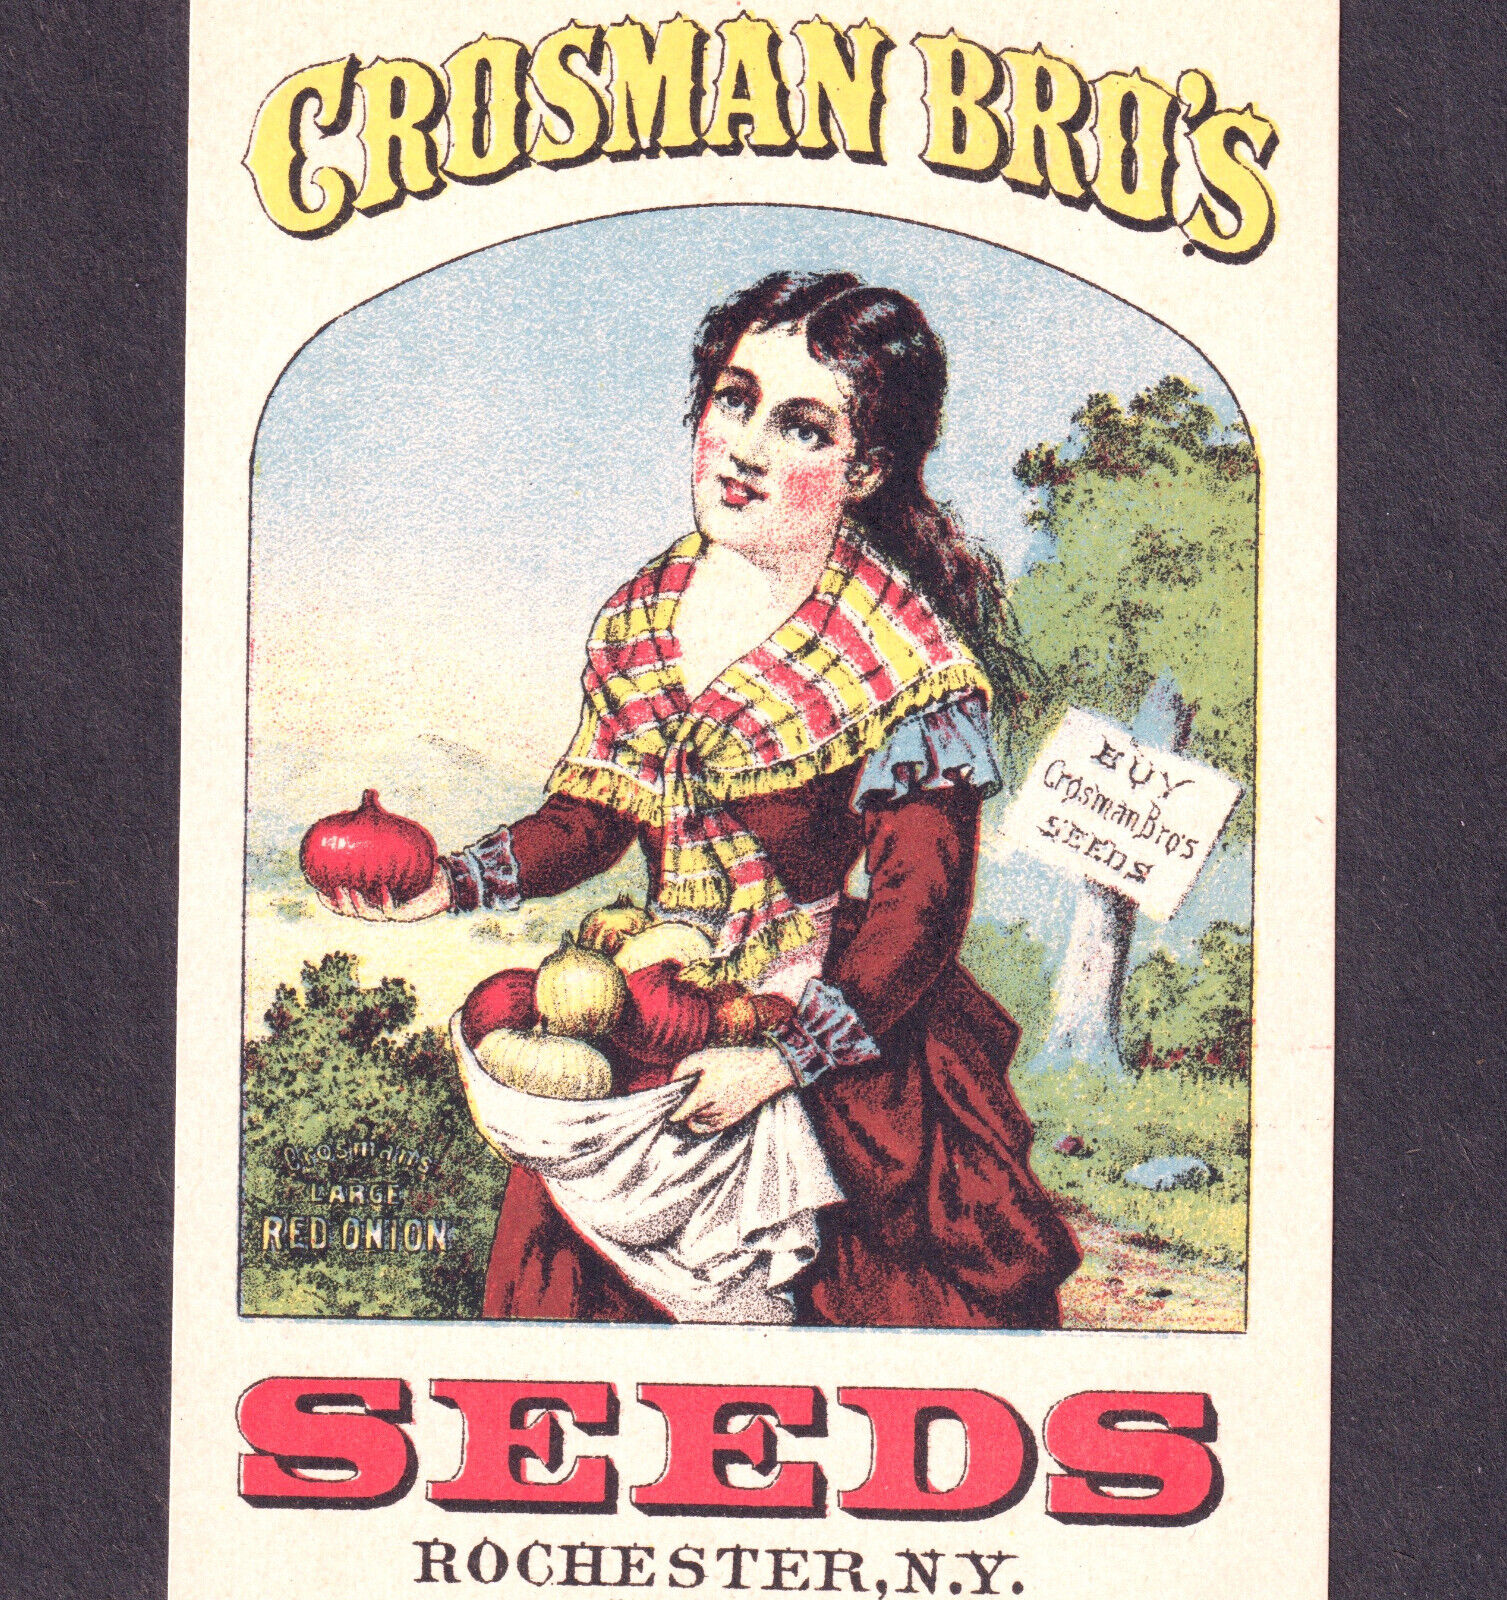 Crosman Bros Seeds Rochester NY 1800's Red Onion Farm Girl Victorian Trade Card